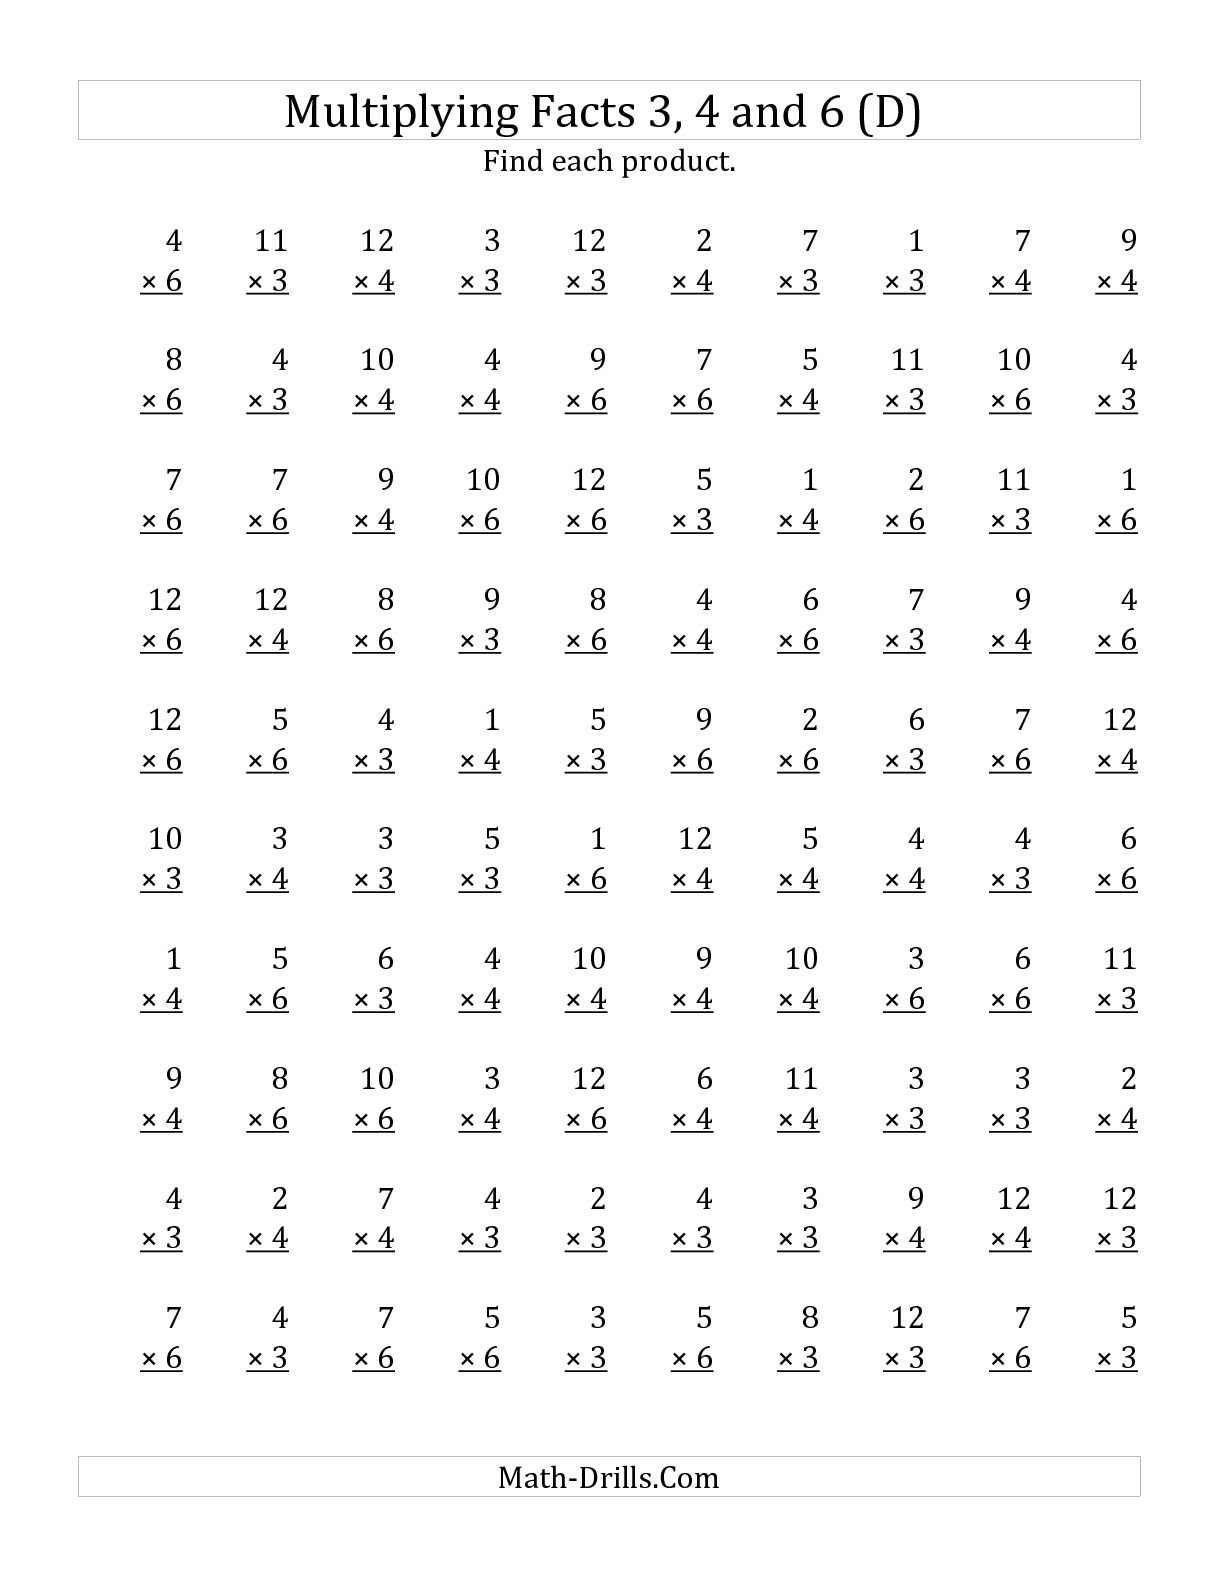 12-best-images-of-beginner-multiplication-worksheets-beginning-multiplication-worksheets